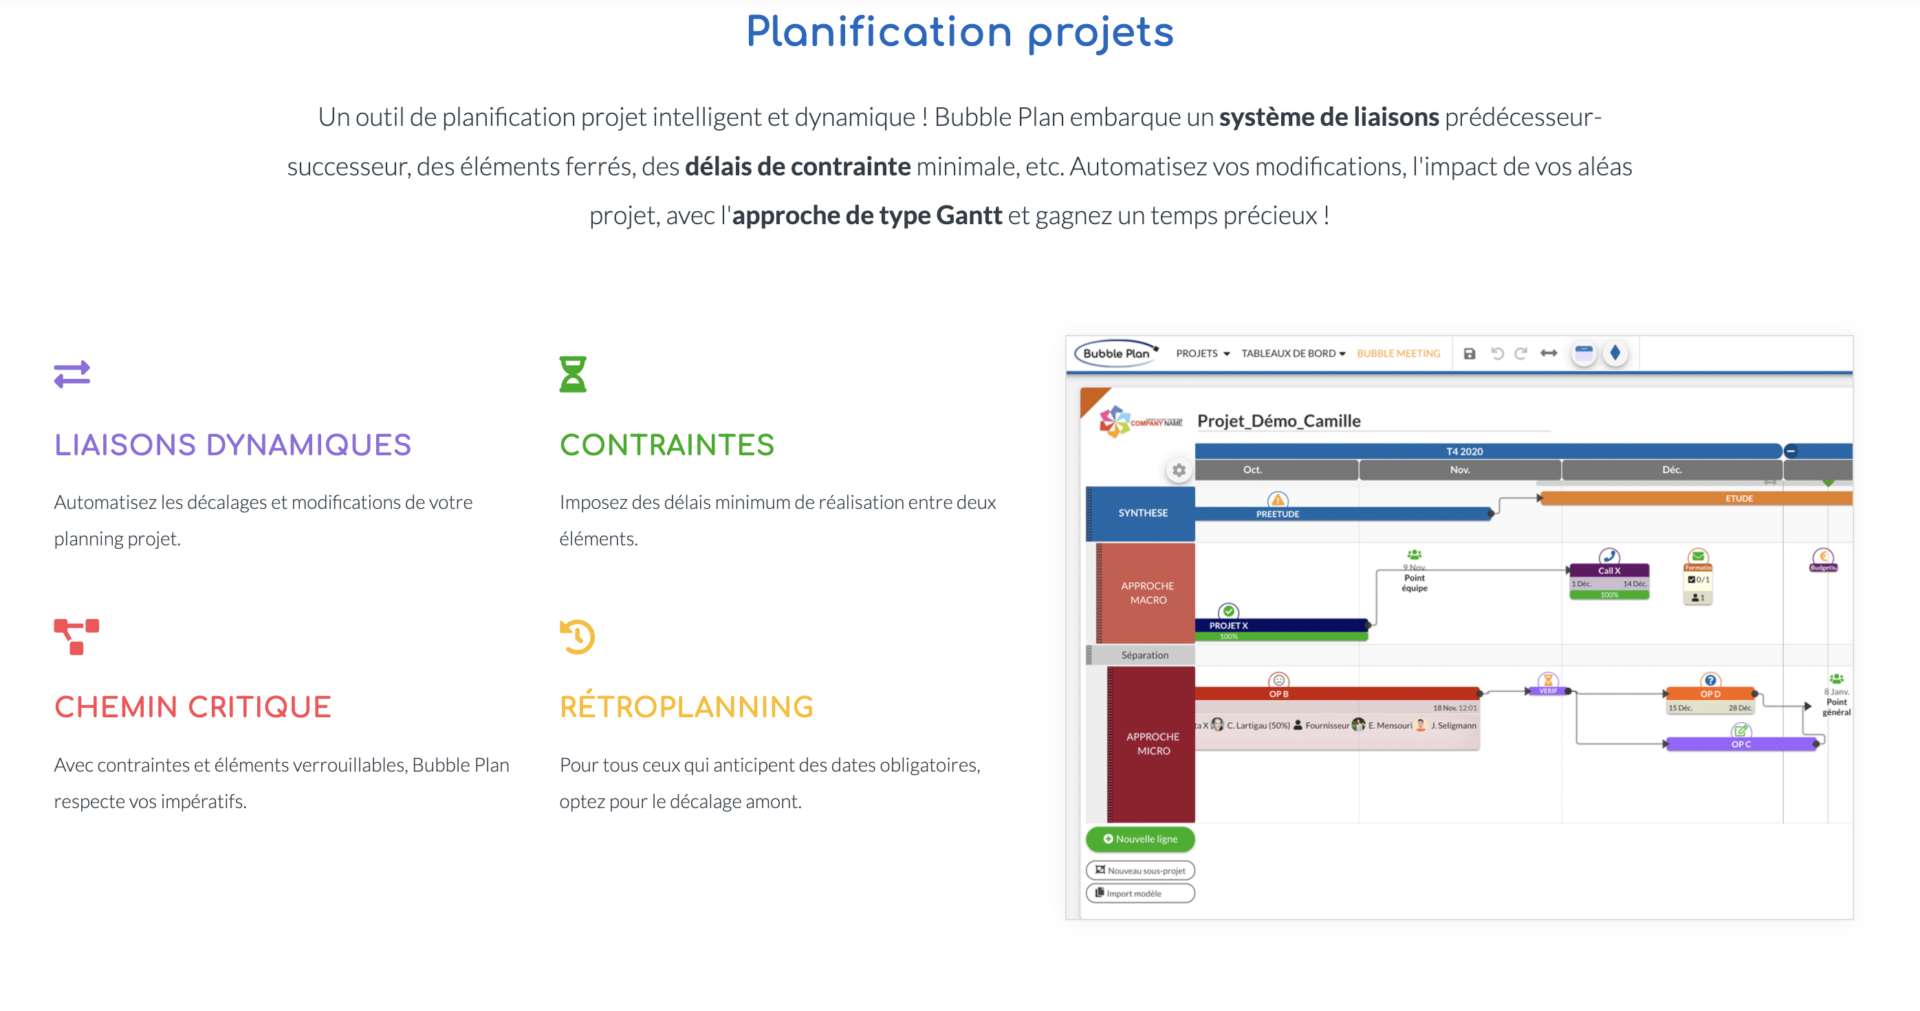 PLanification projets - Bubble Plan